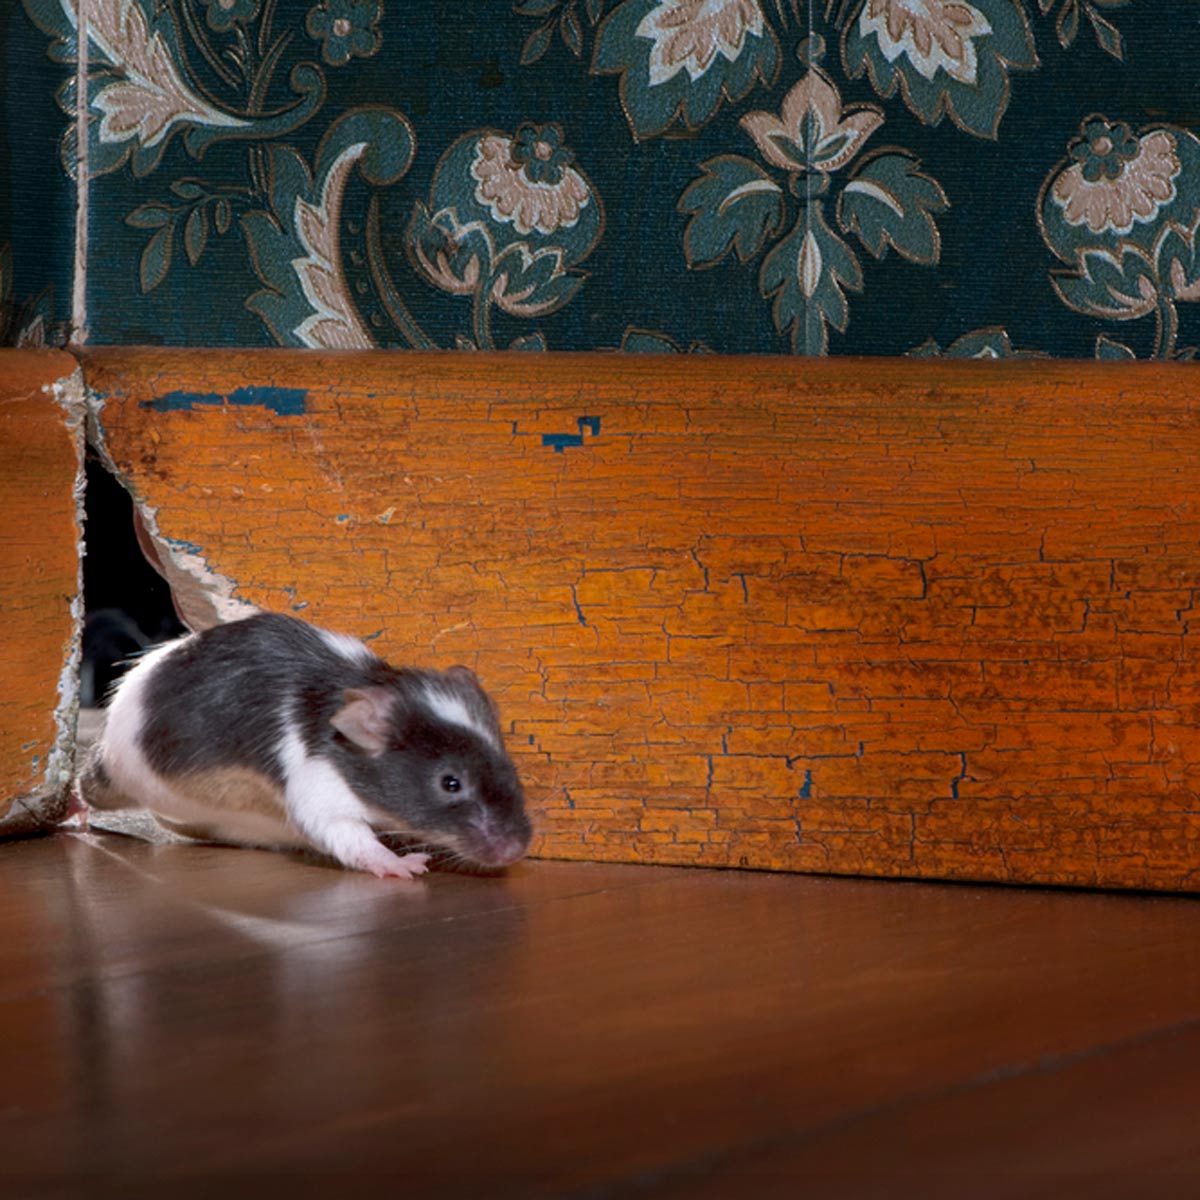 Mouse Away Cubes - Best Humane Mouse Trap - No Poison, No Mess